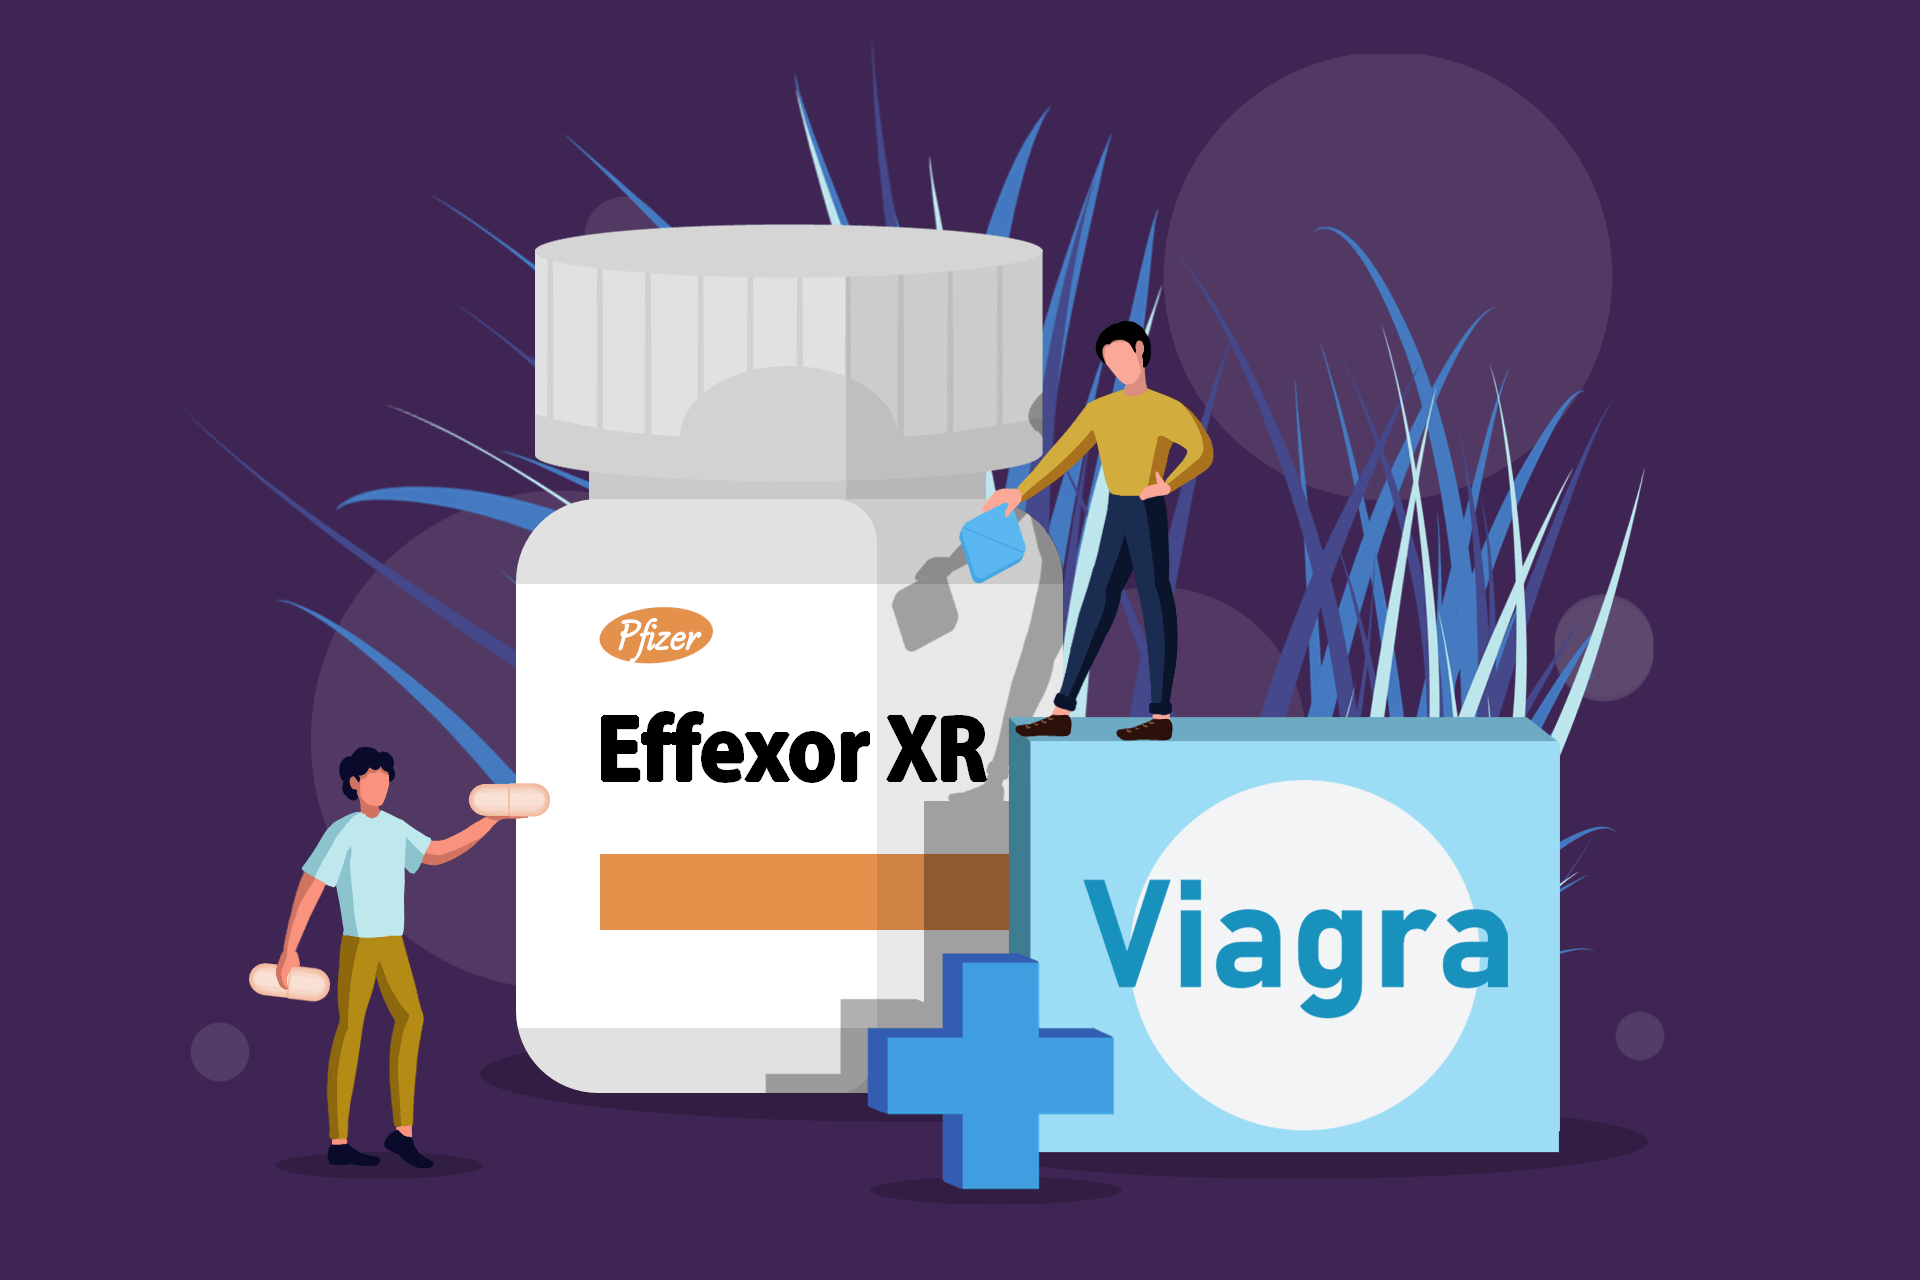 Effexor and Viagra